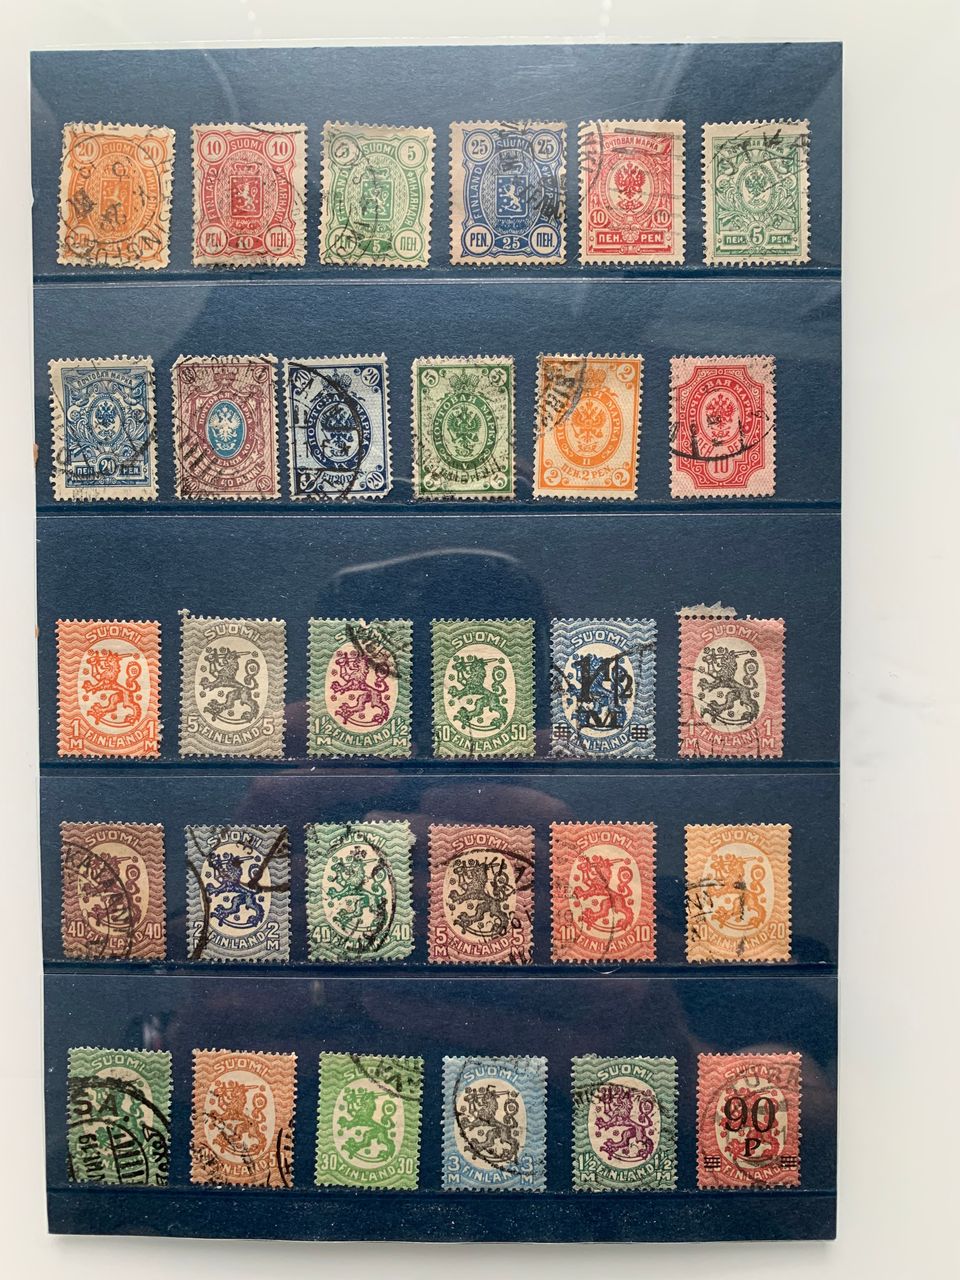 Vanhat Suomi postimerkit 82kpl - erilaisia